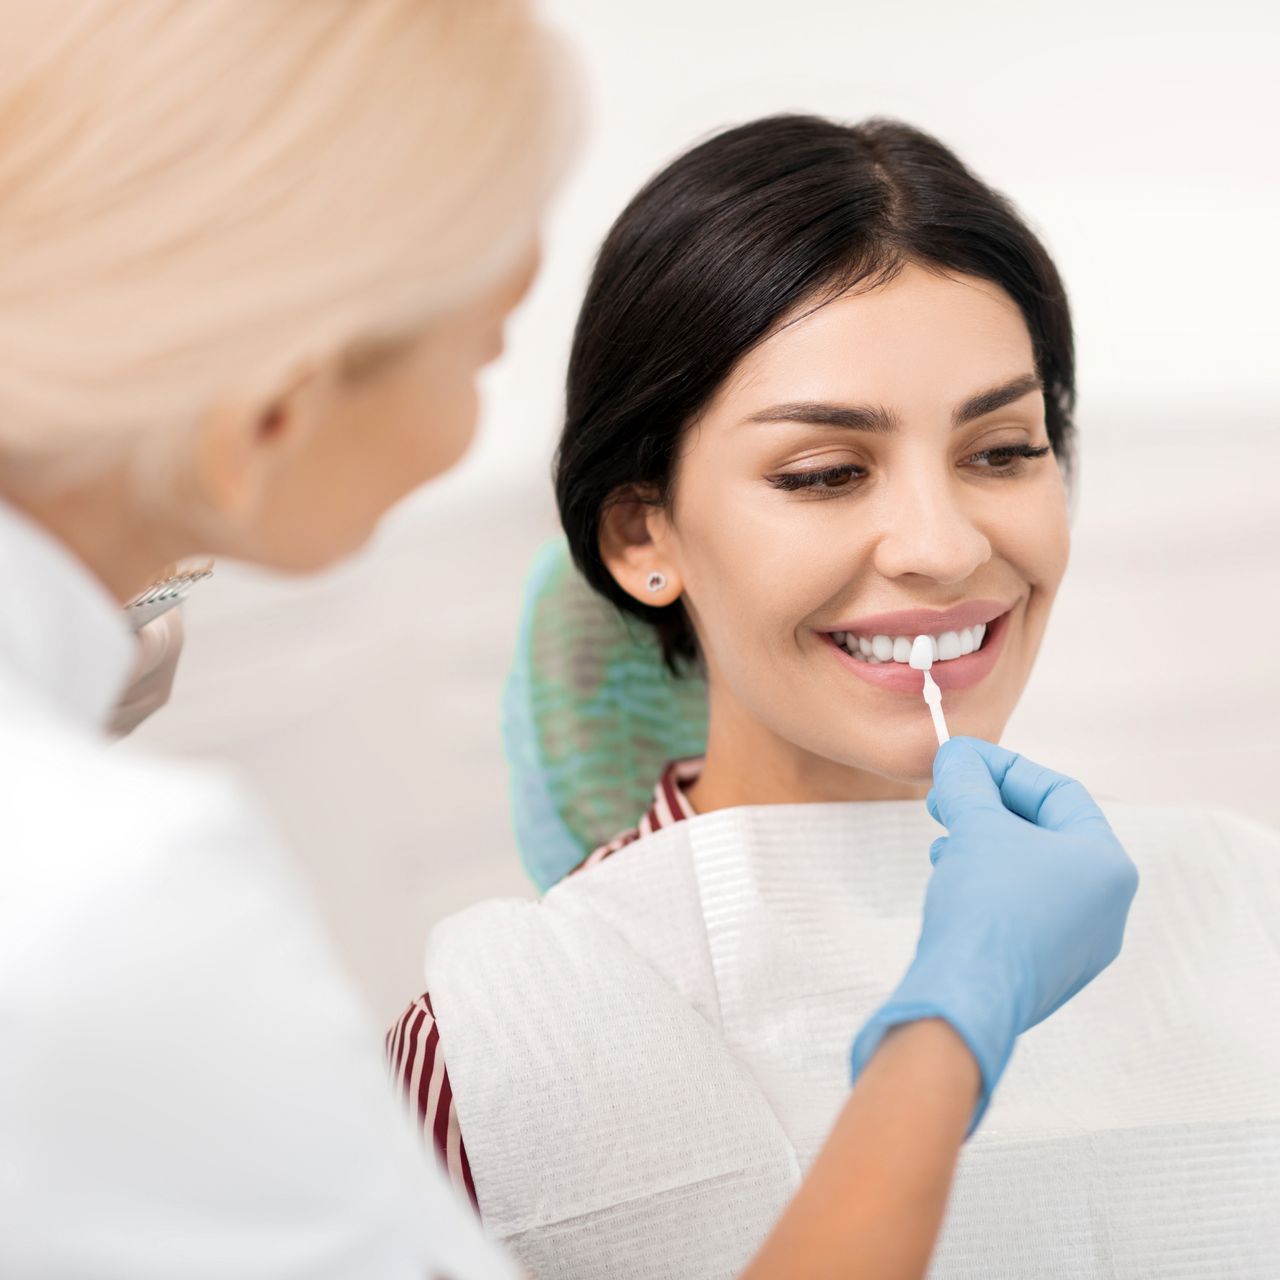 teeth whitening treatment on woman